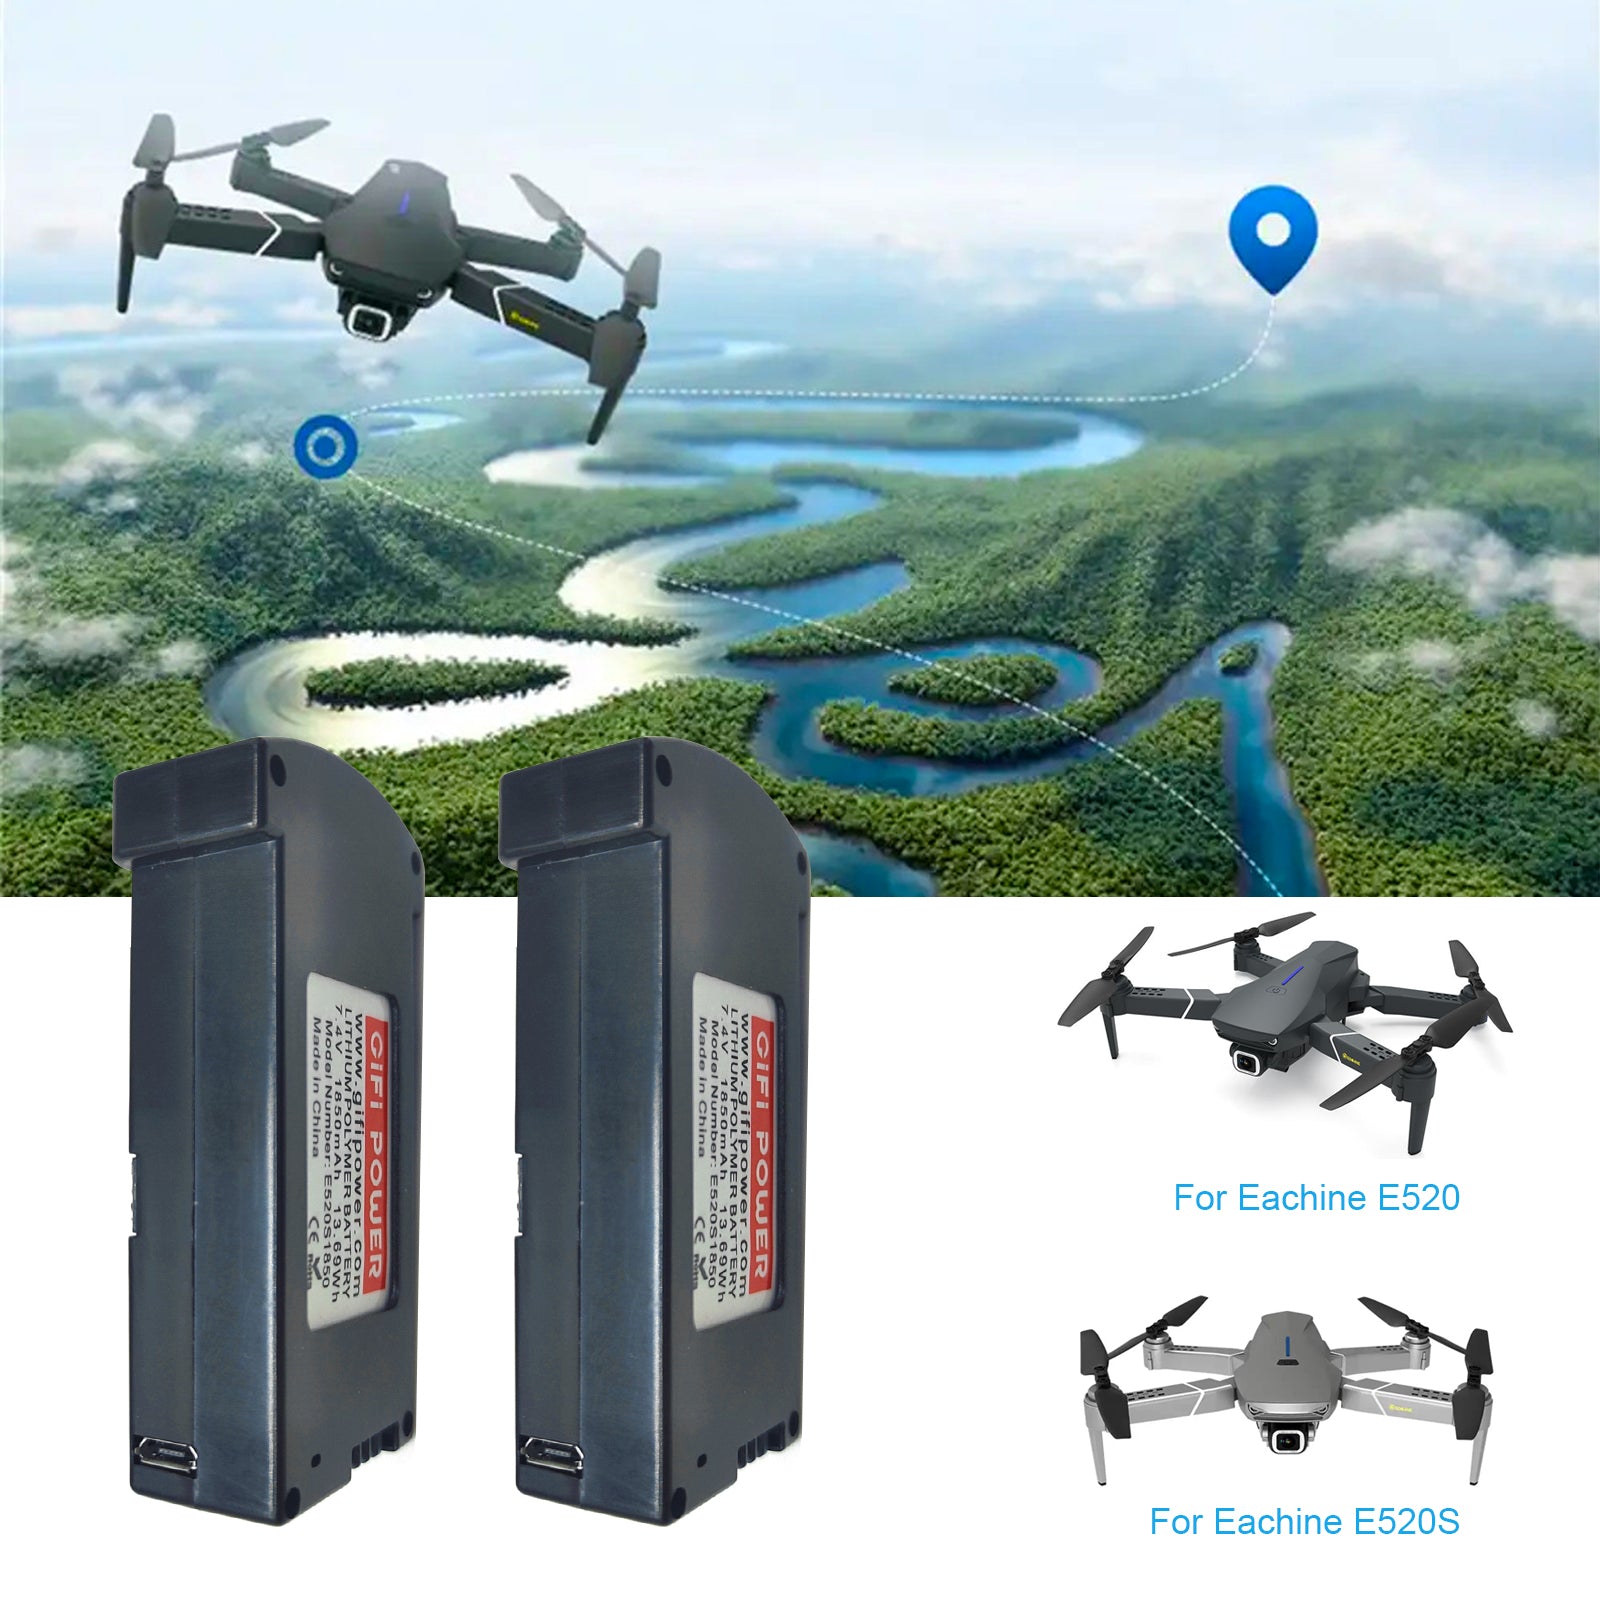 7.4V 1850MAH LiPo Battery Accessories Spare Battery For Eachine E520 E520S Quadcopter